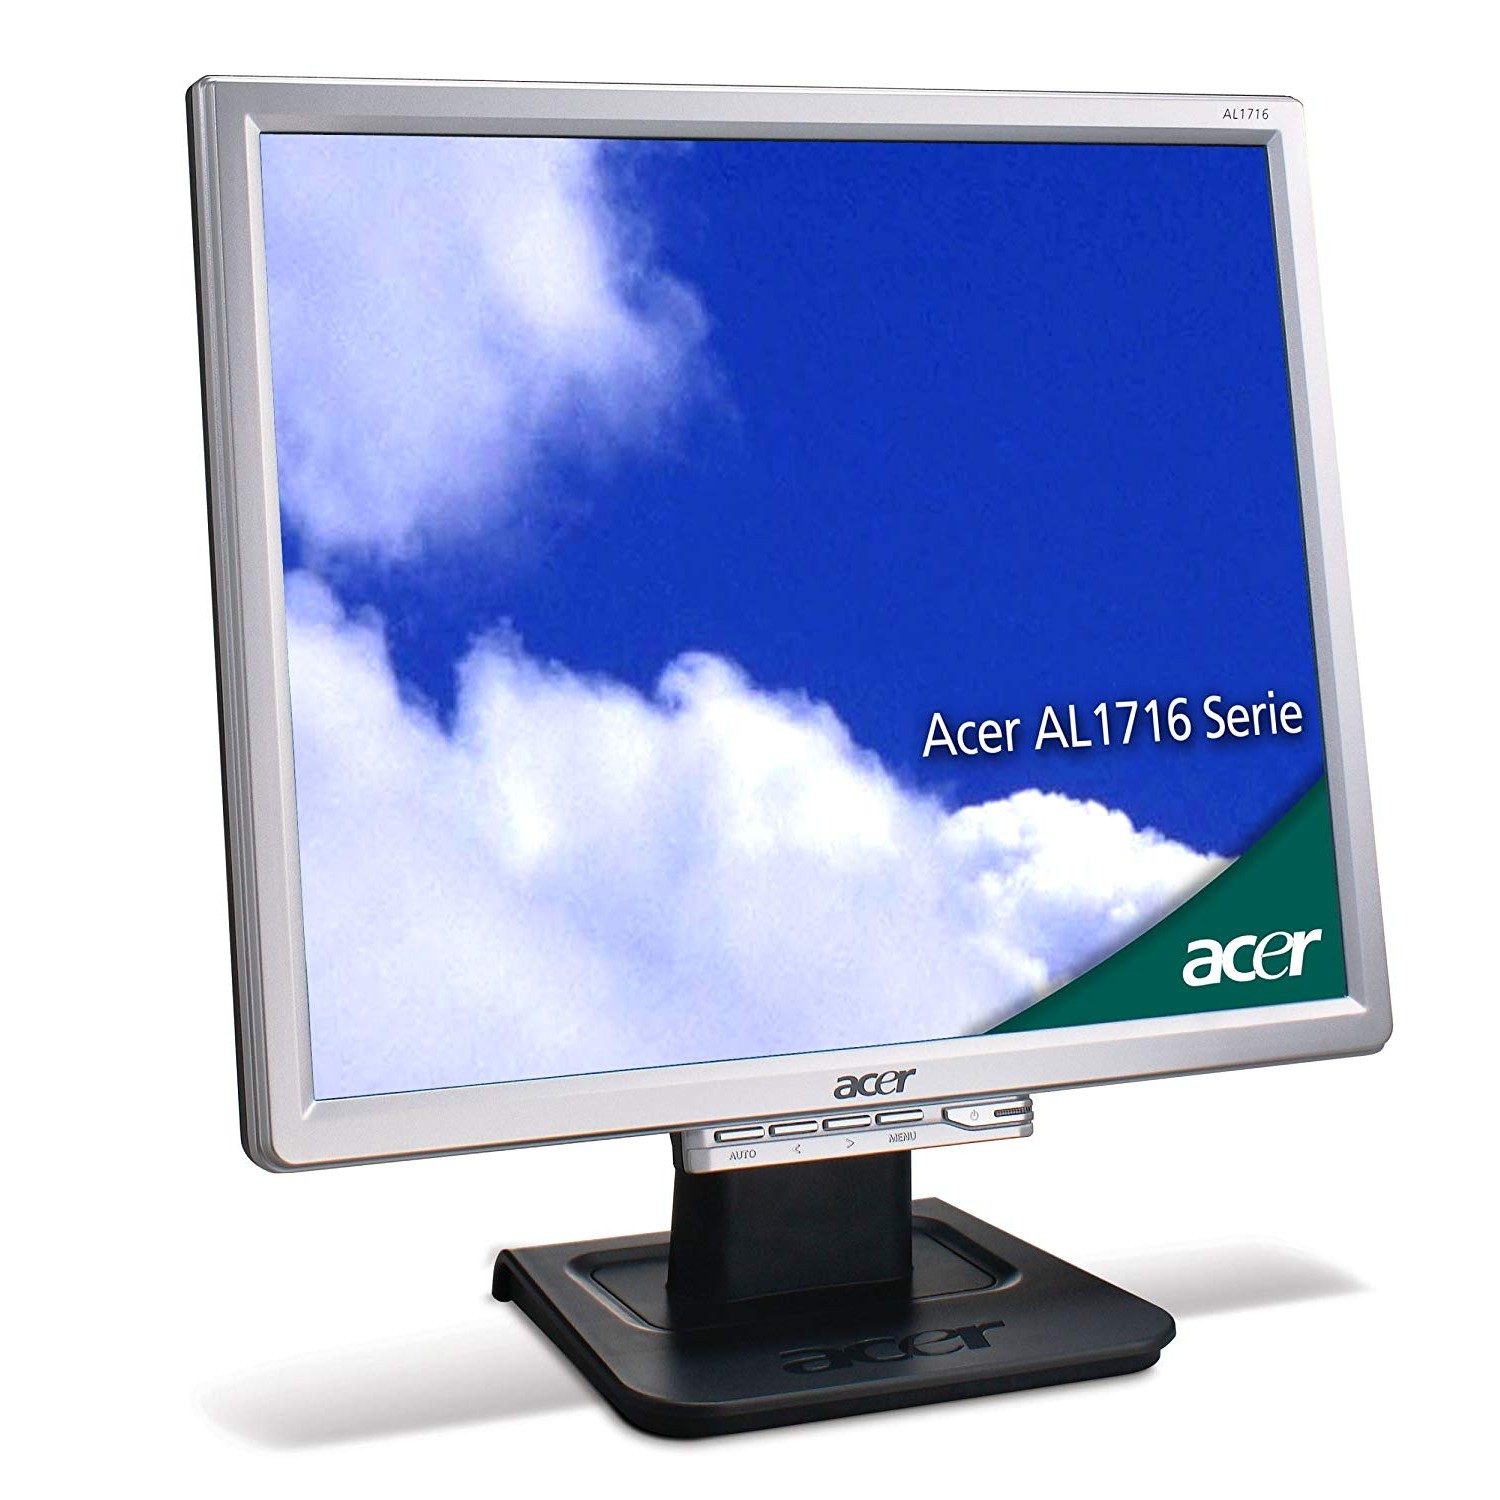 ACER used οθόνη AL1716 LCD, 17" 1280 x 1024, VGA, SQ